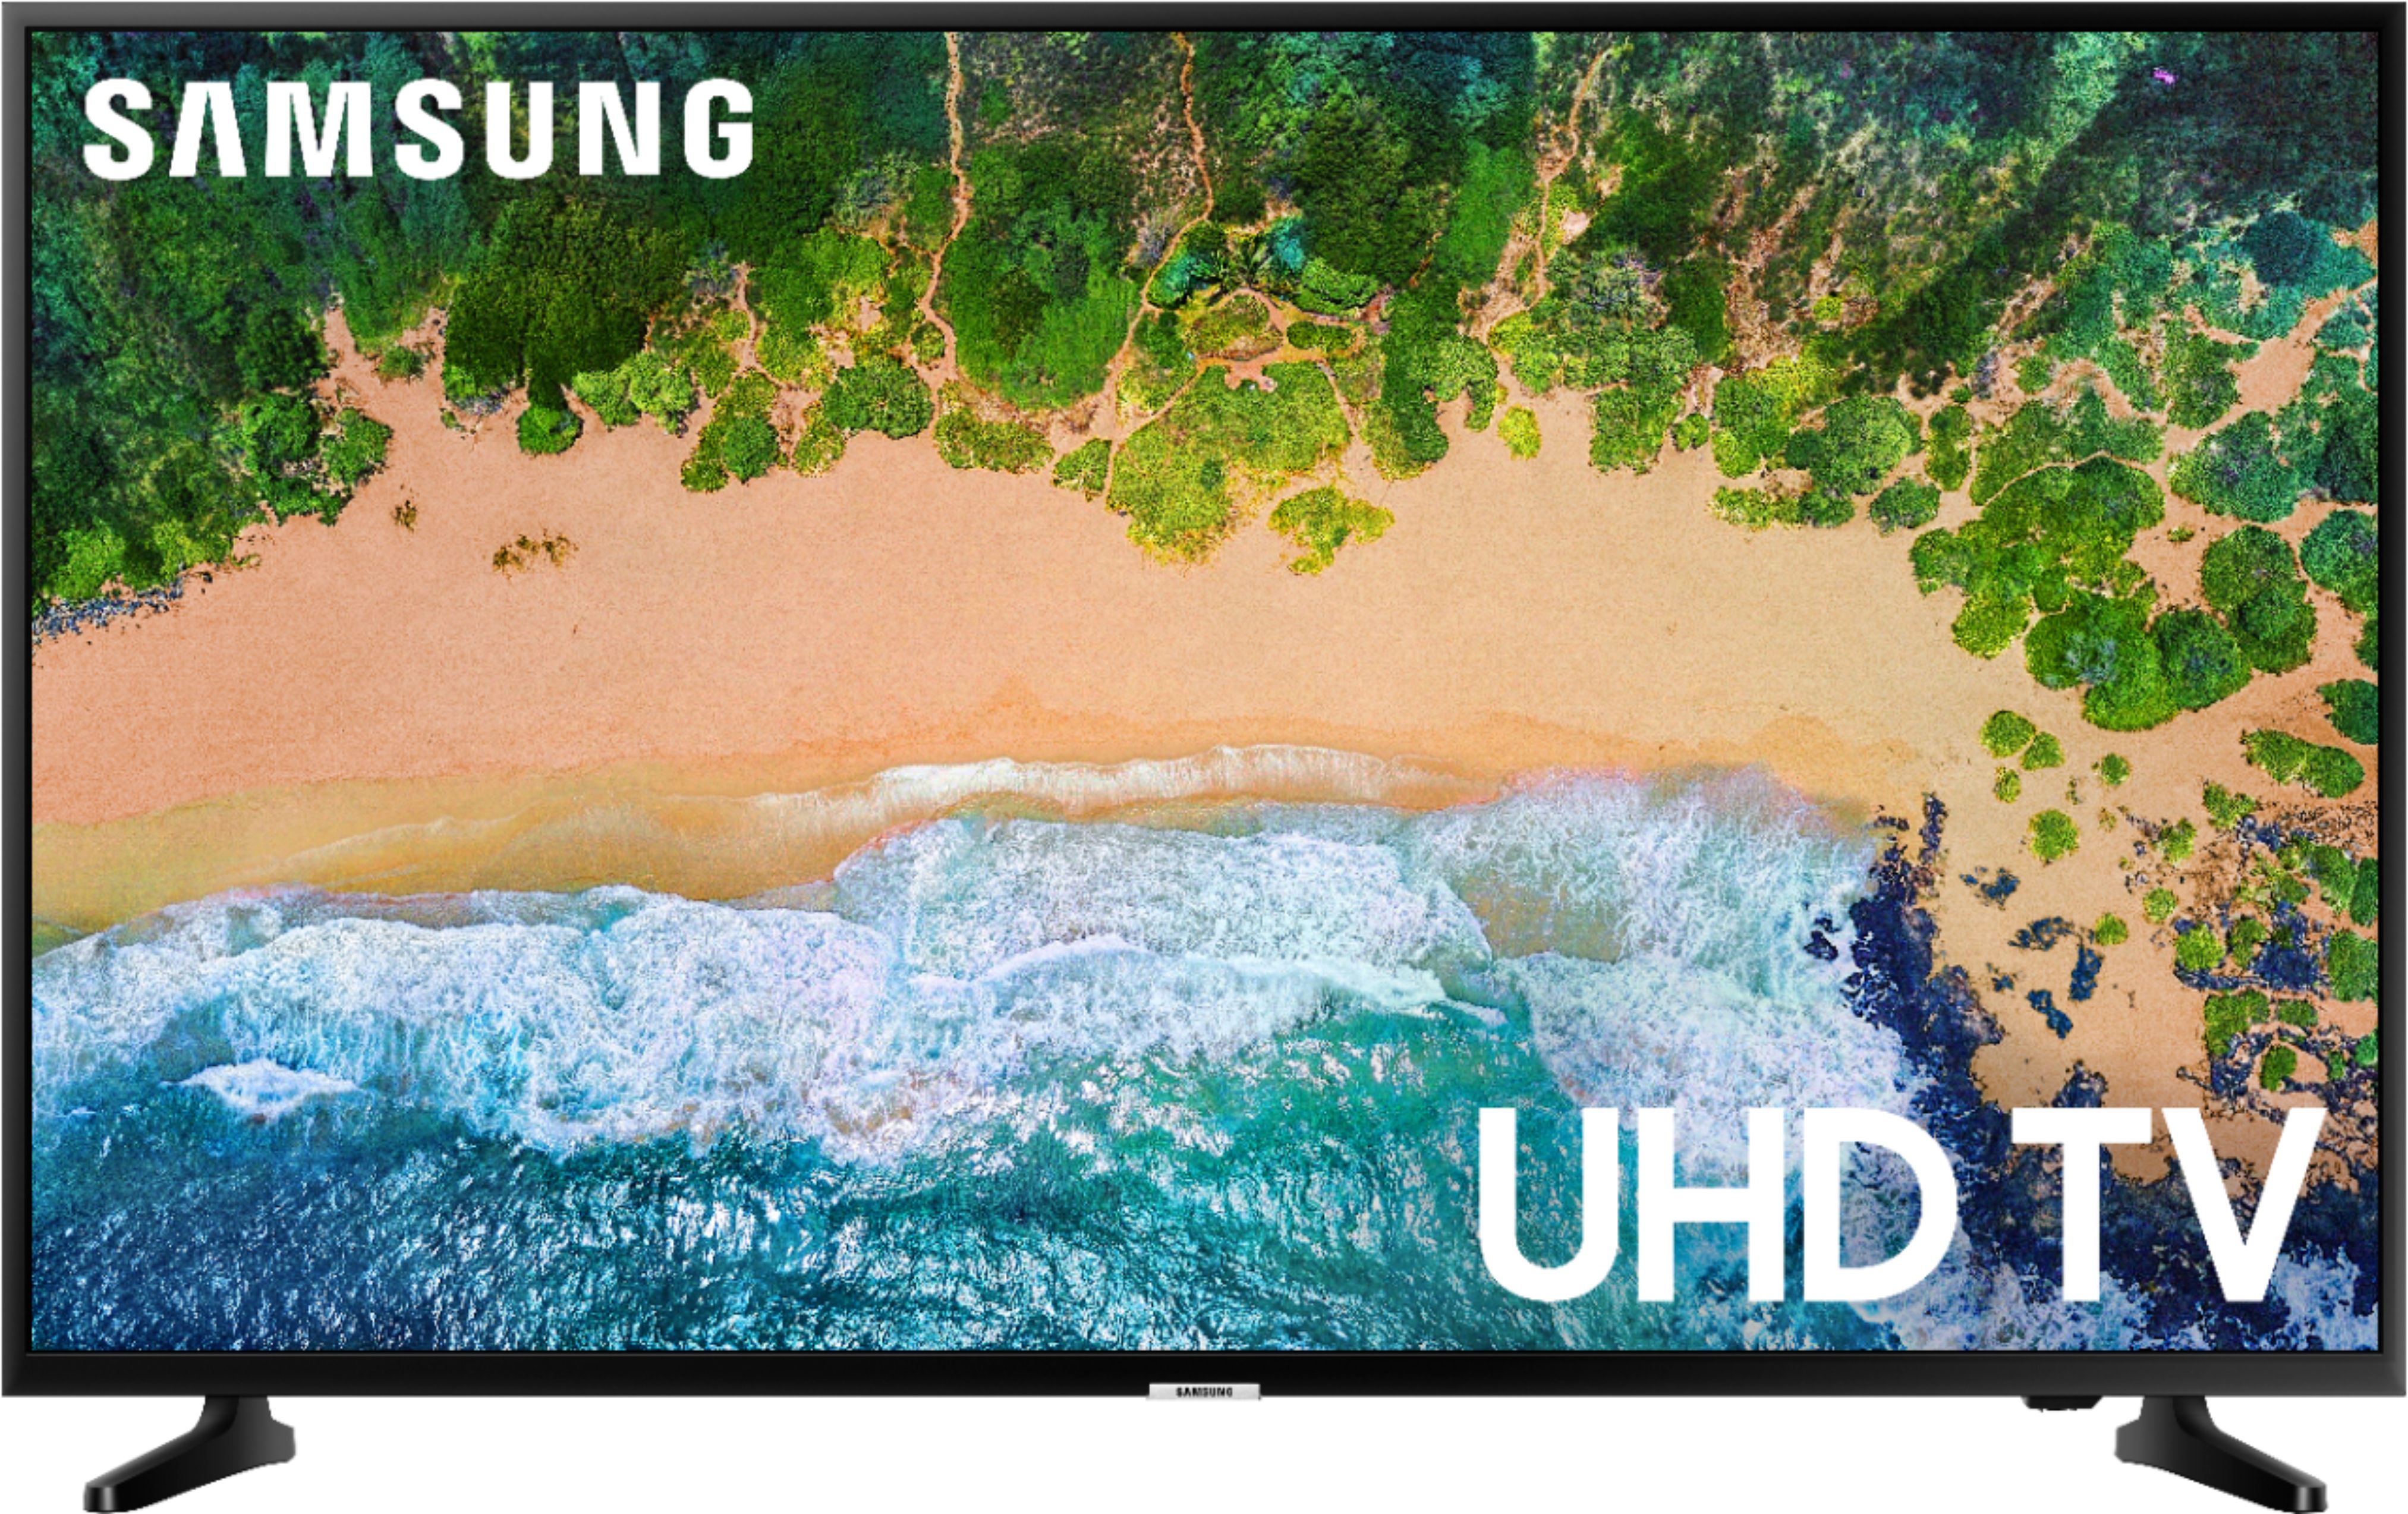 Samsung 58" Class LED MU6070 2160p 4K UHD TV with HDR UN58MU6070/EXZA - Best